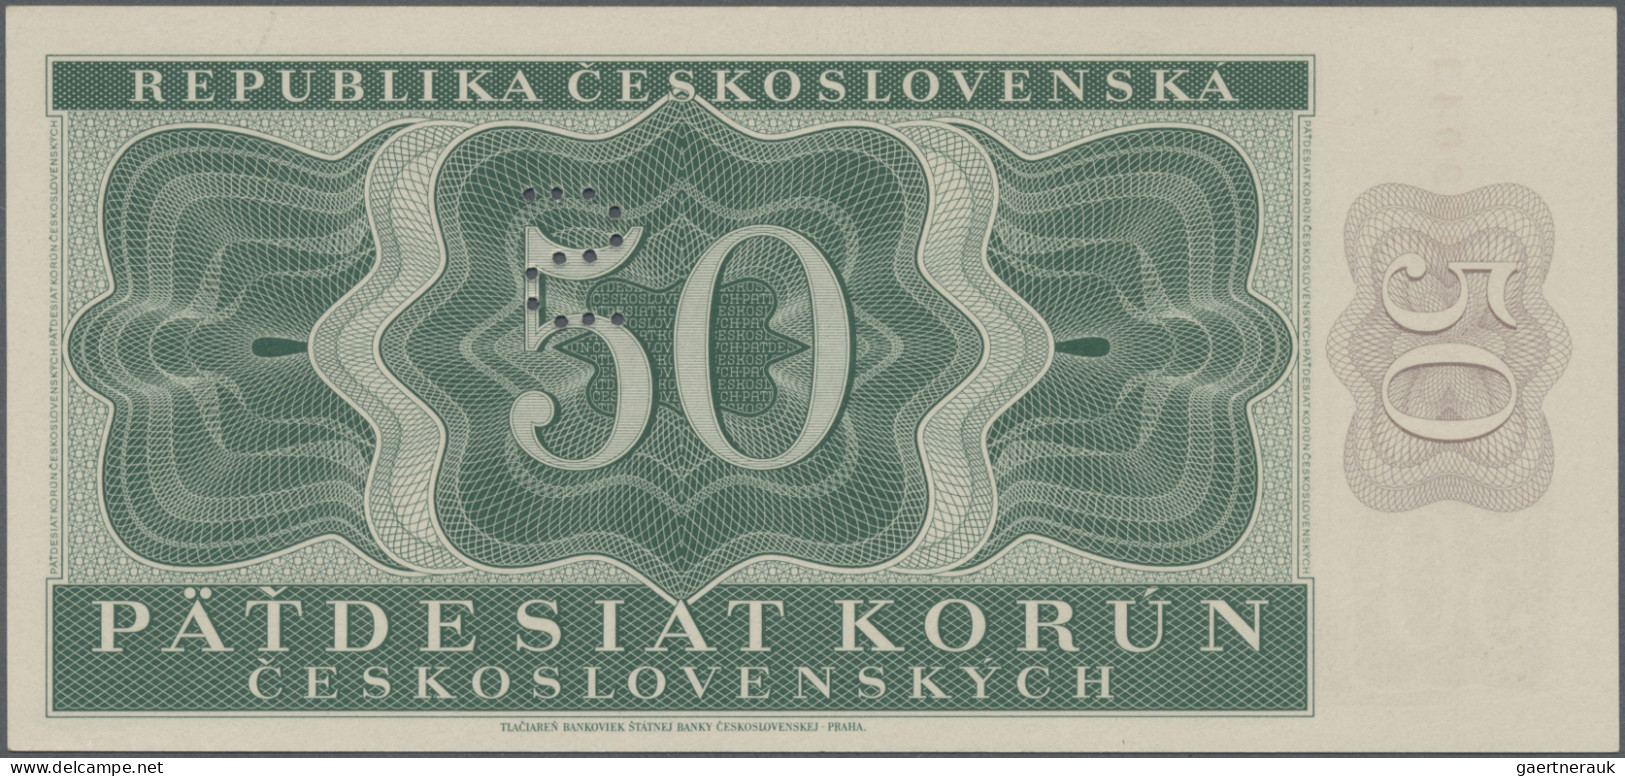 Czechoslovakia: REPUBLIKA ČESKOSLOVENSKÁ, lot with 31 banknotes, series 1945-195